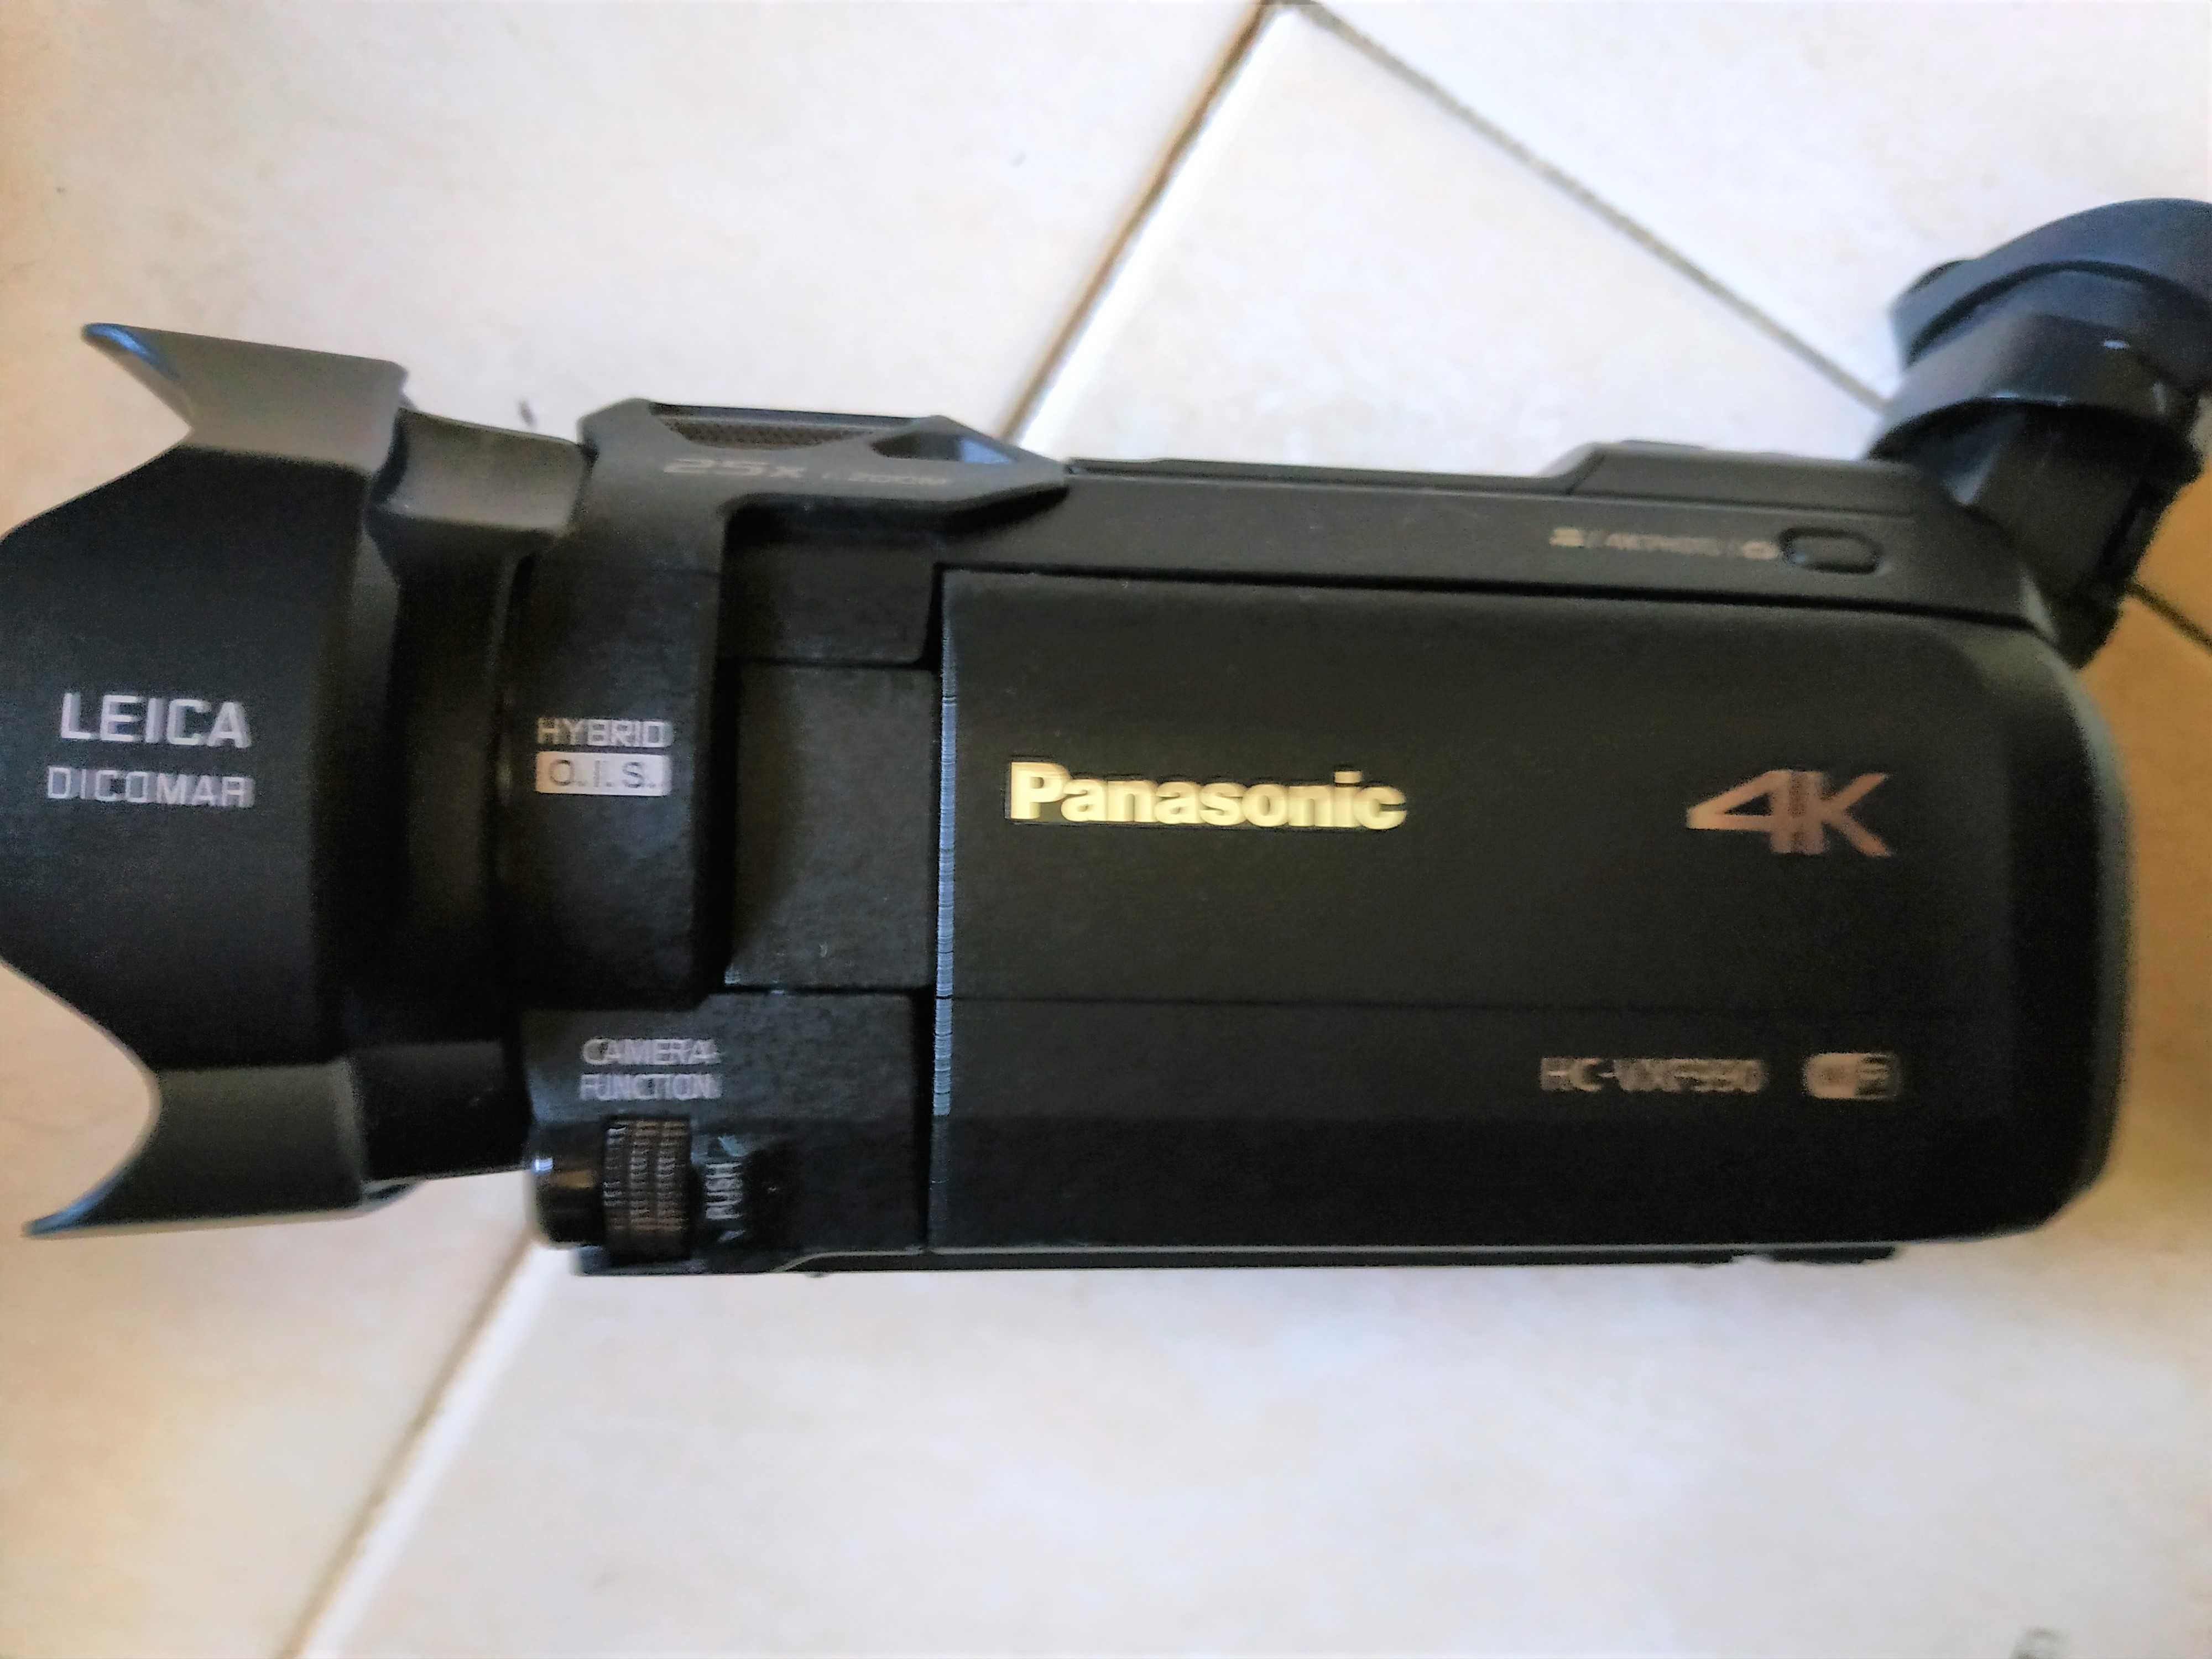 Câmara de filmar Panasonic HC-VXF990